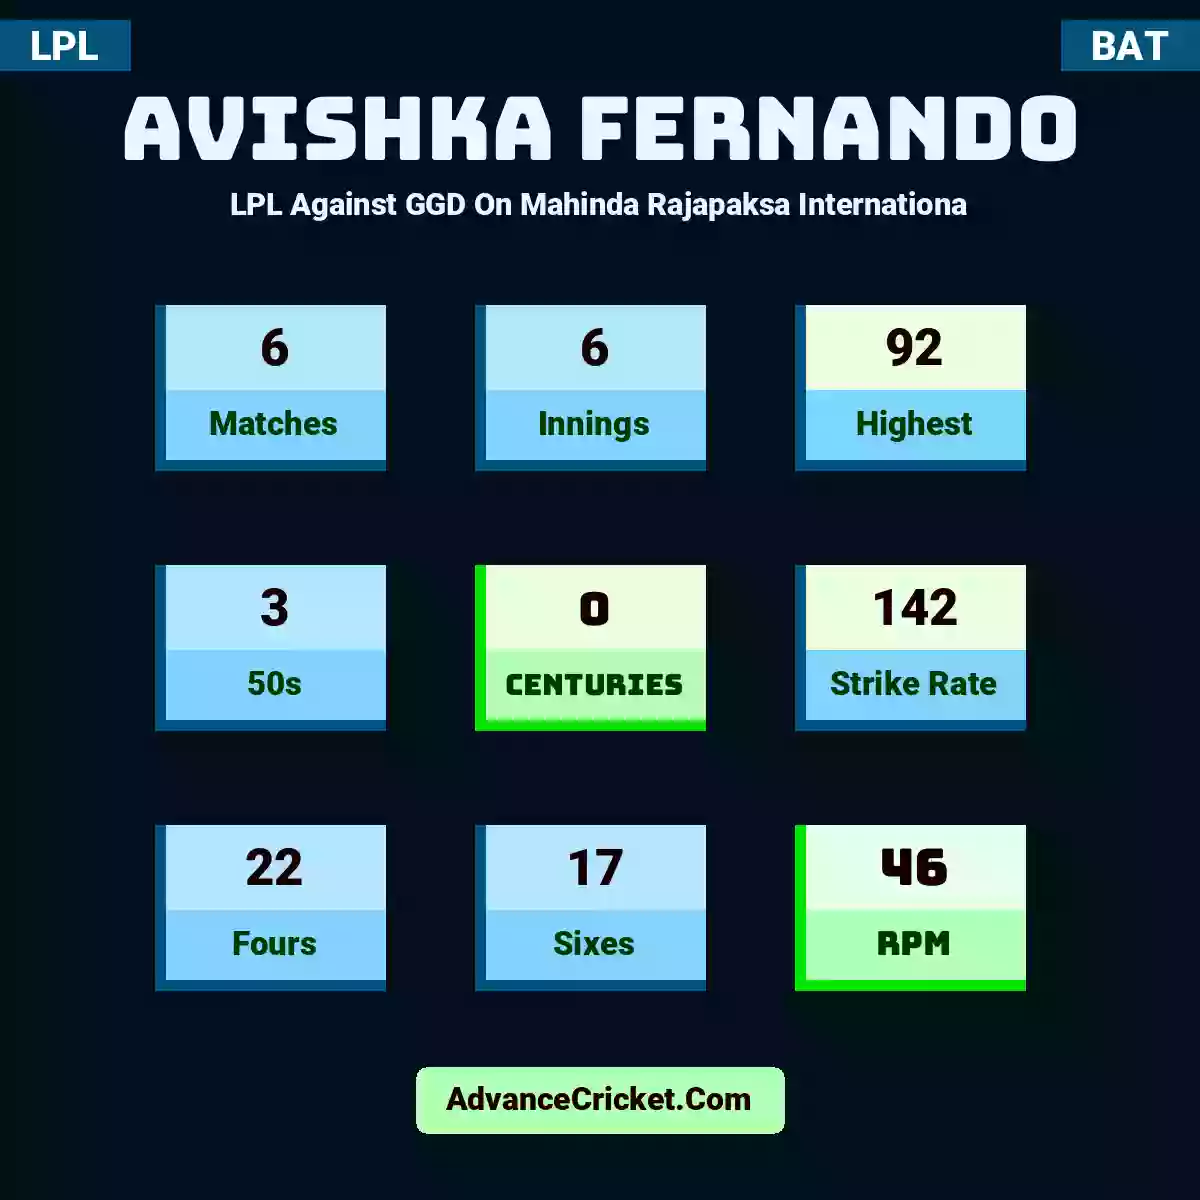 Avishka Fernando LPL  Against GGD On Mahinda Rajapaksa Internationa, Avishka Fernando played 6 matches, scored 92 runs as highest, 3 half-centuries, and 0 centuries, with a strike rate of 142. A.Fernando hit 22 fours and 17 sixes, with an RPM of 46.